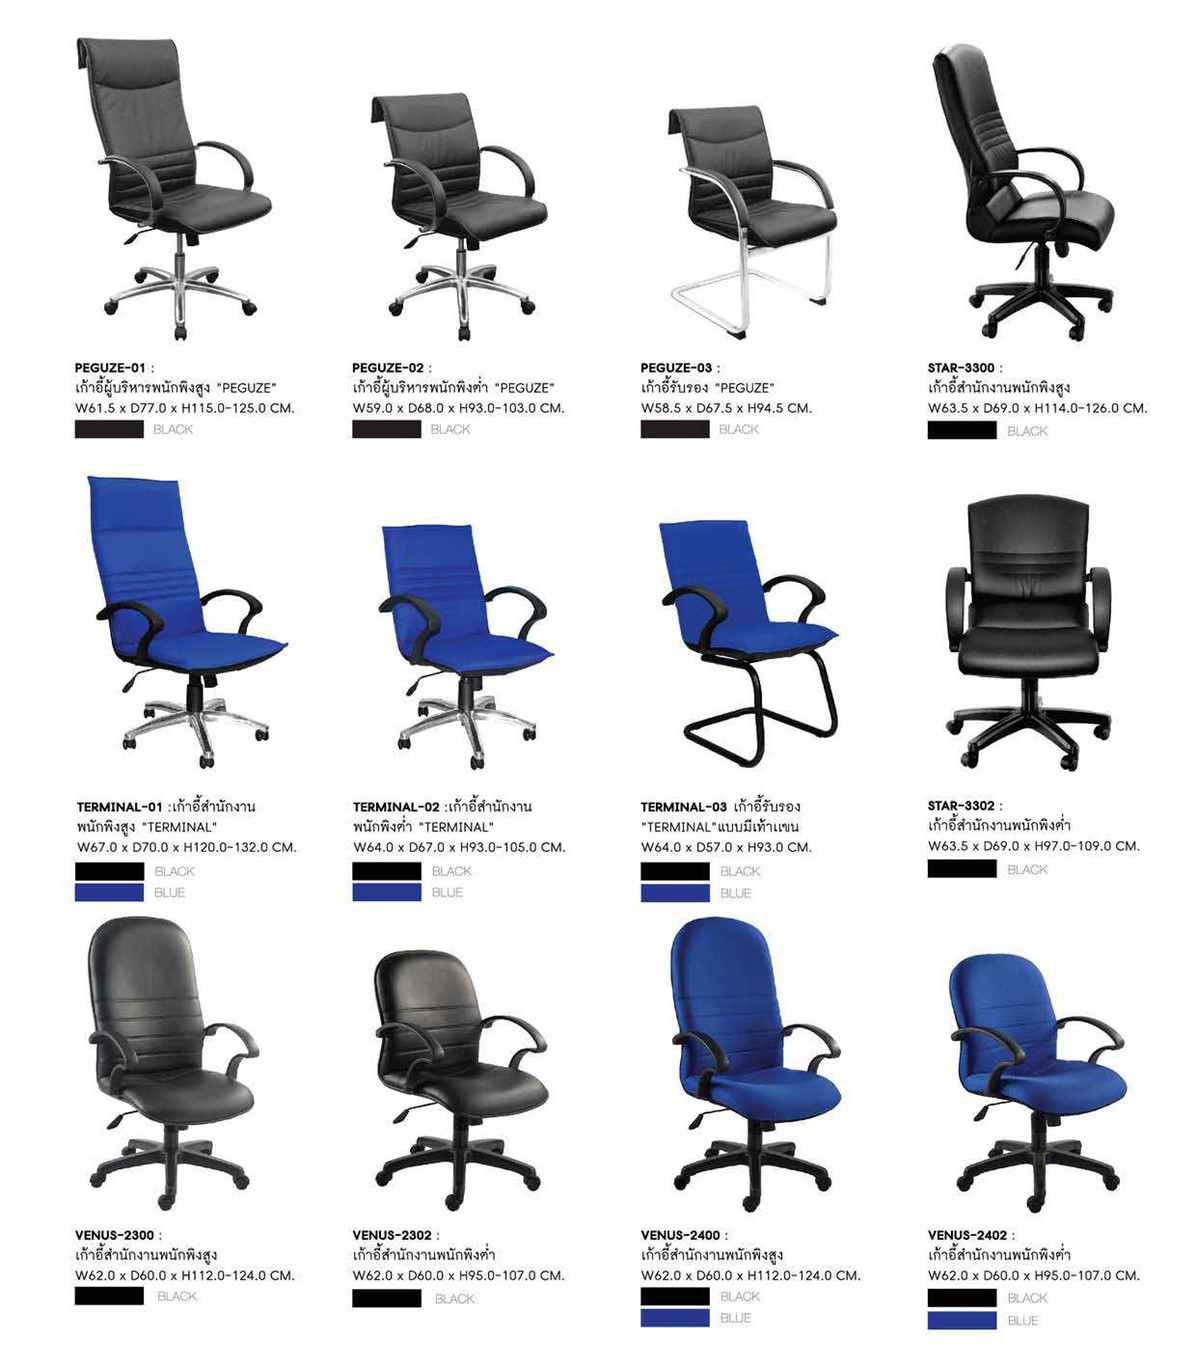 27095::VENUS-2402::เก้าอี้สำนักงาน VENUS ก620xล630xส960-1060มม. บุผ้า สีน้ำเงิน,ดำ พนักพิงต่ำ เก้าอี้สำนักงาน SURE